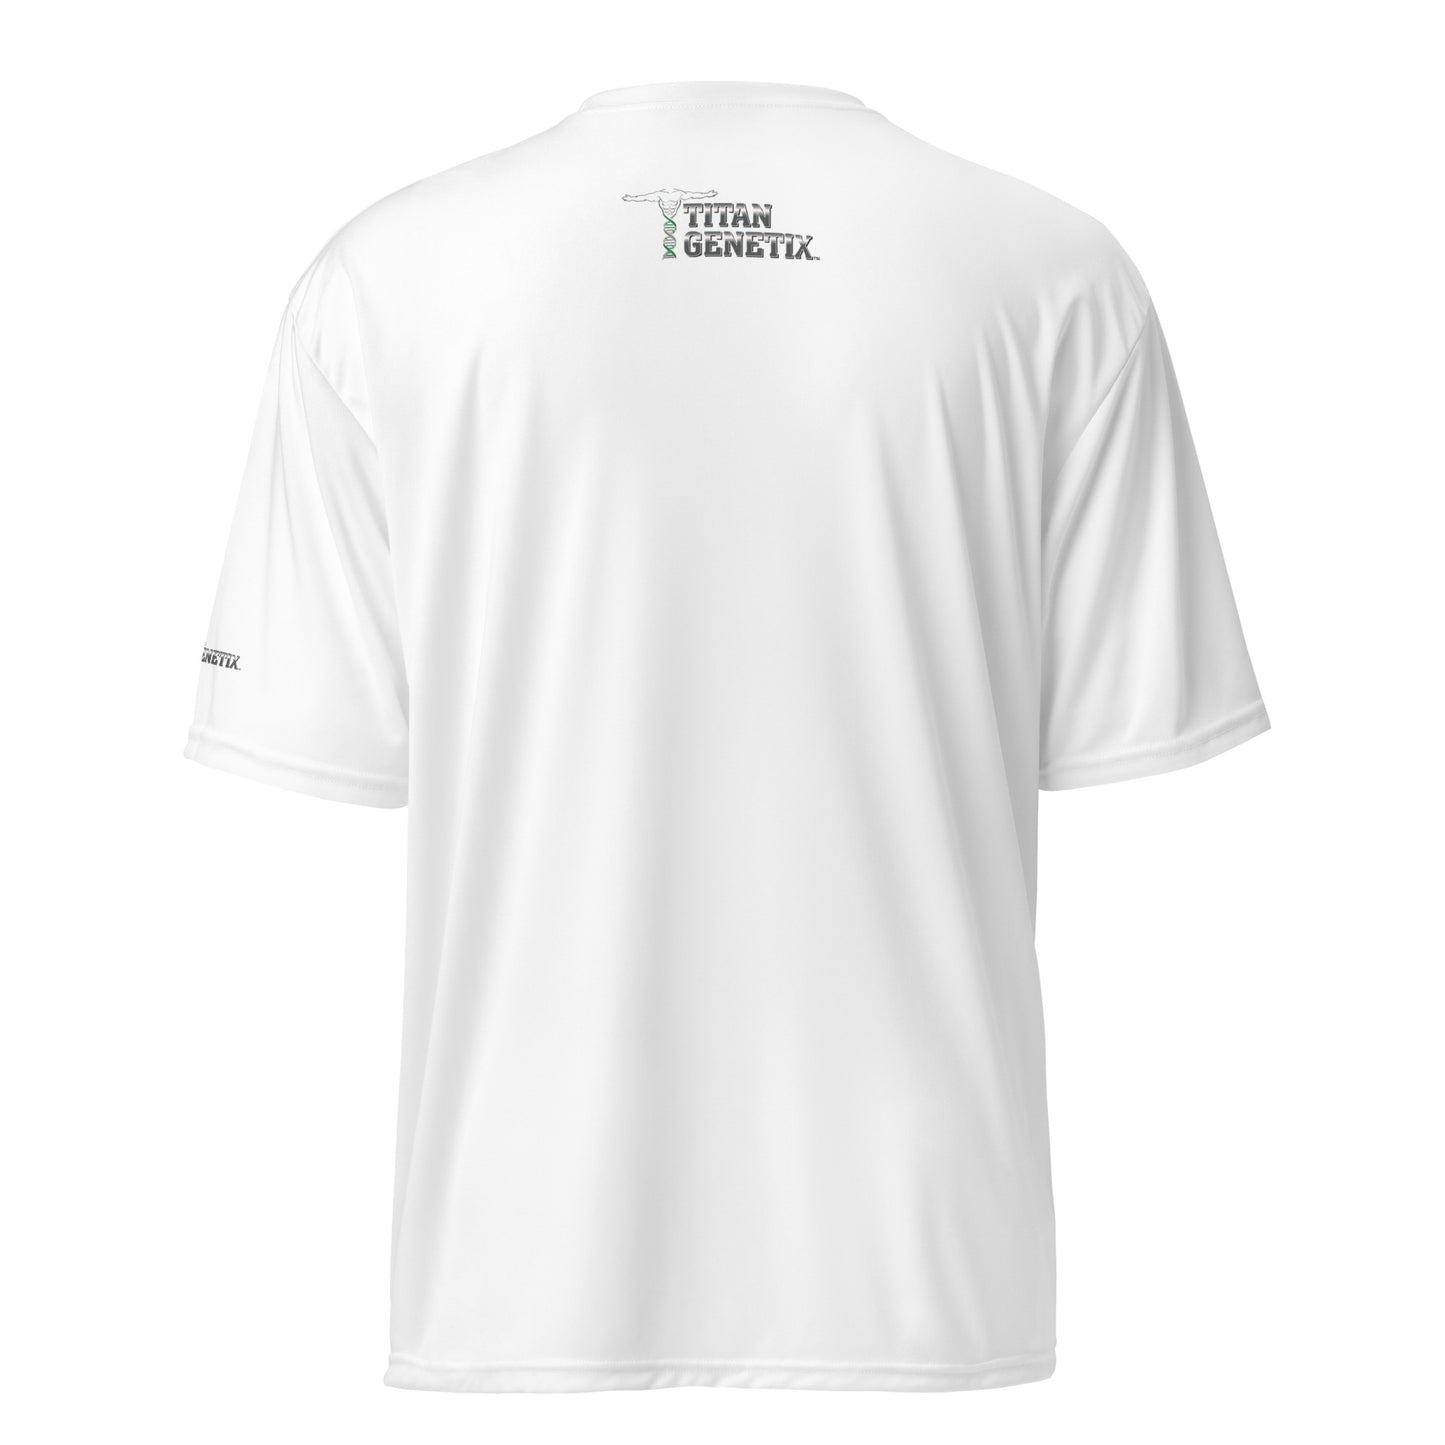 Titan Genetix - Unisex Performance Jersey T-Shirt